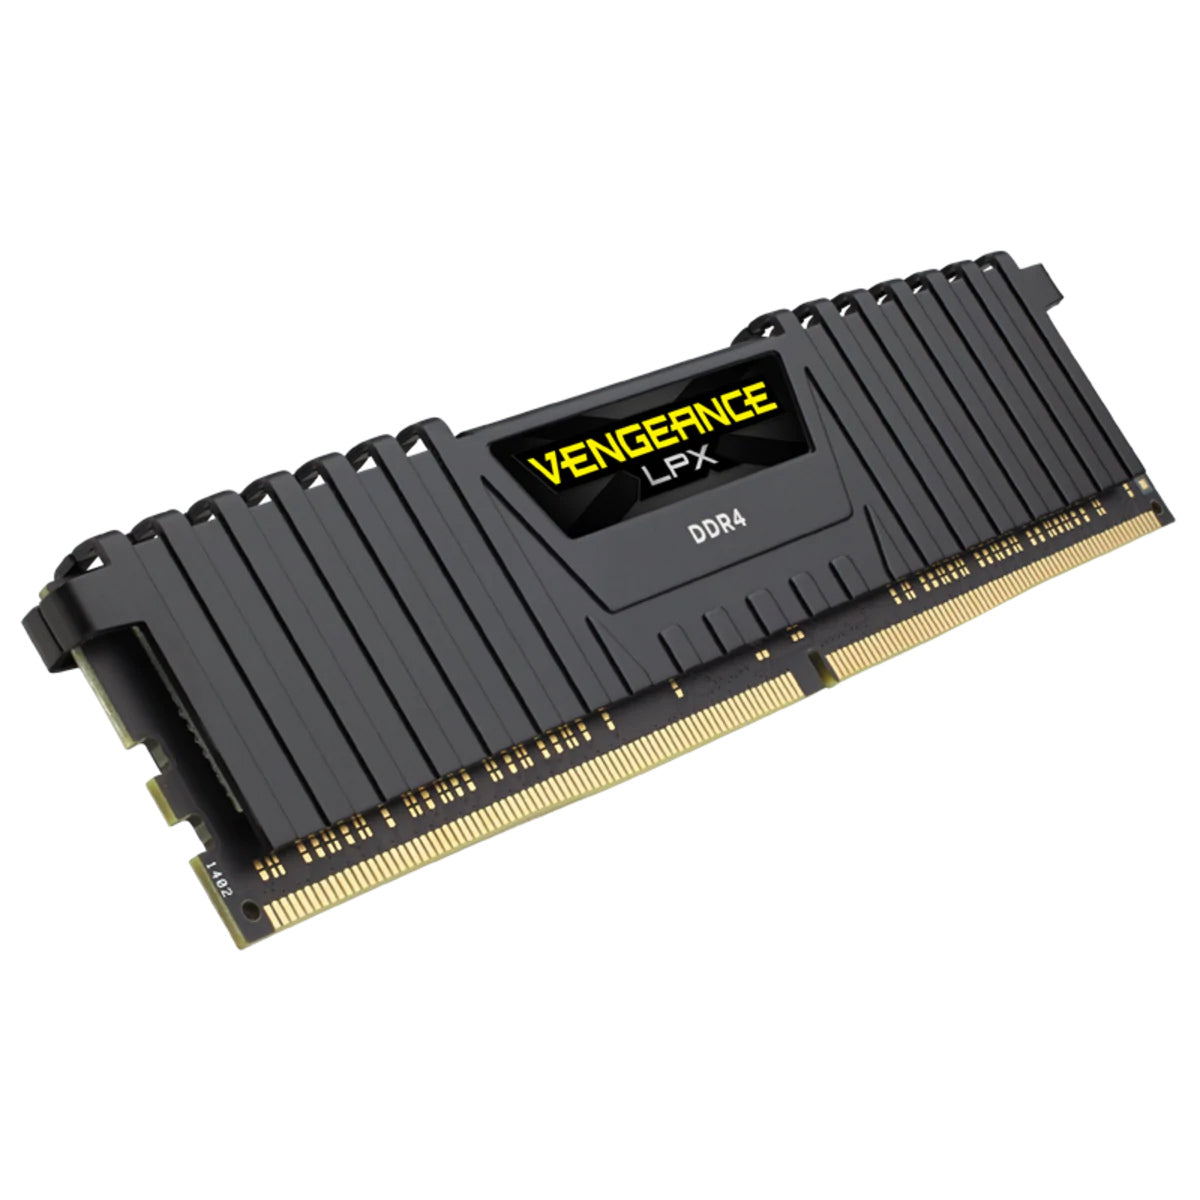 Corsair Vengeance LPX RAM 8GB DDR4 RAM 3600MHz Desktop Memory